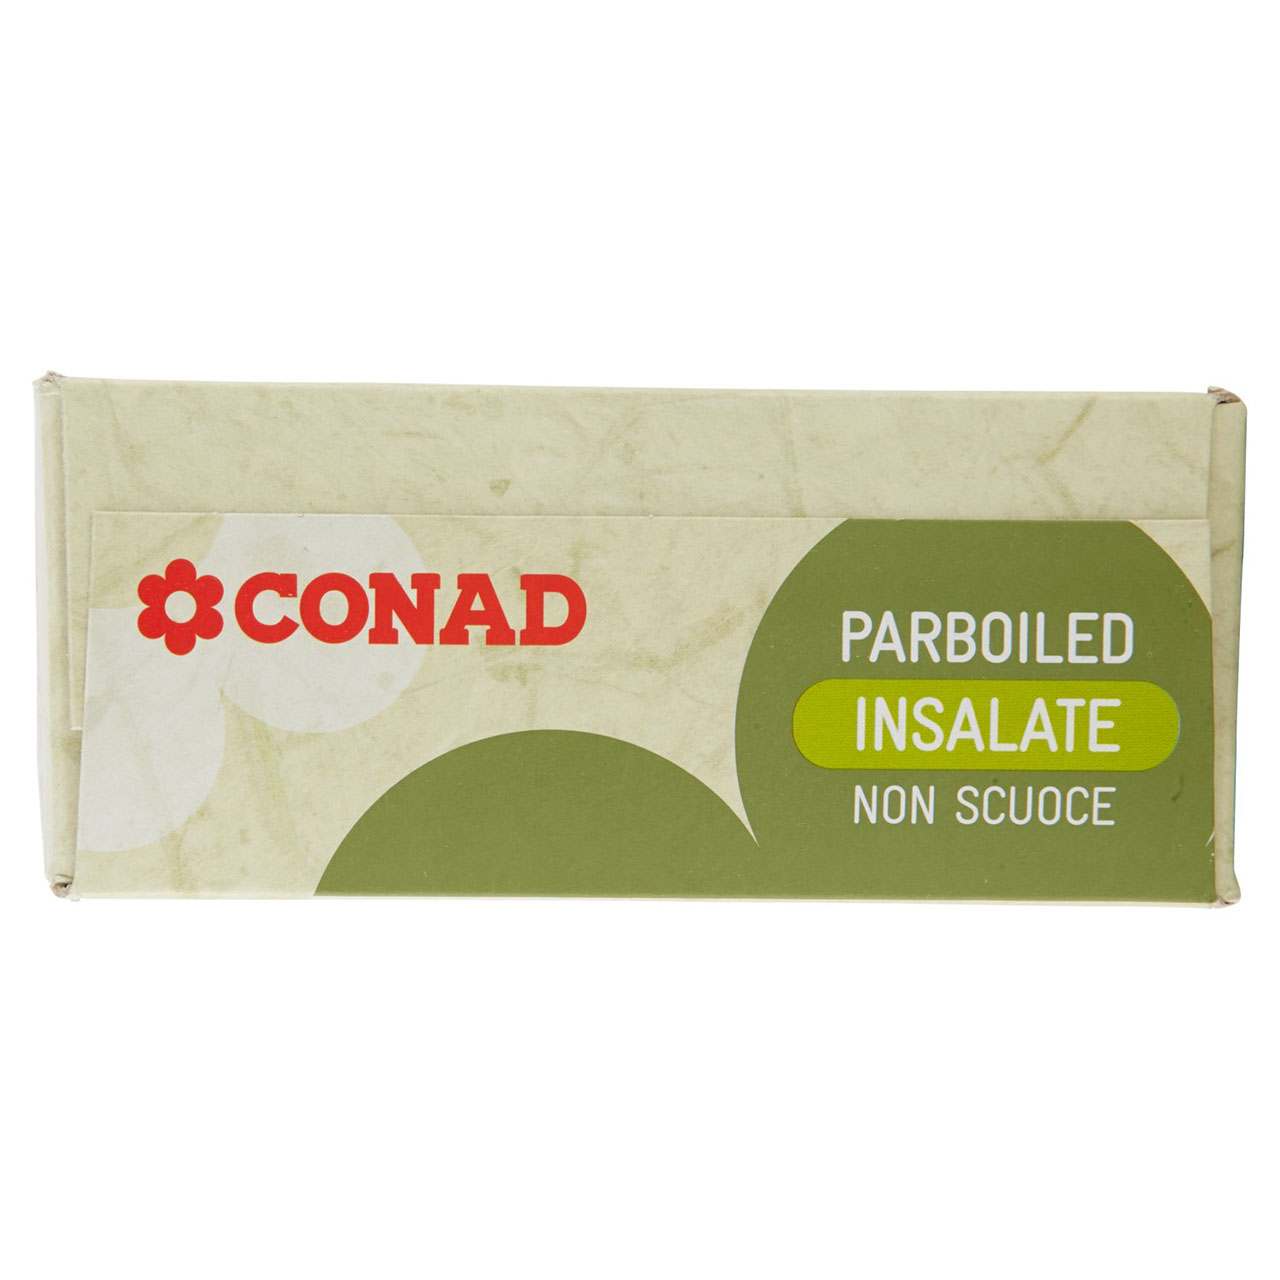 Parboiled insalate kg 1 Conad in vendita online